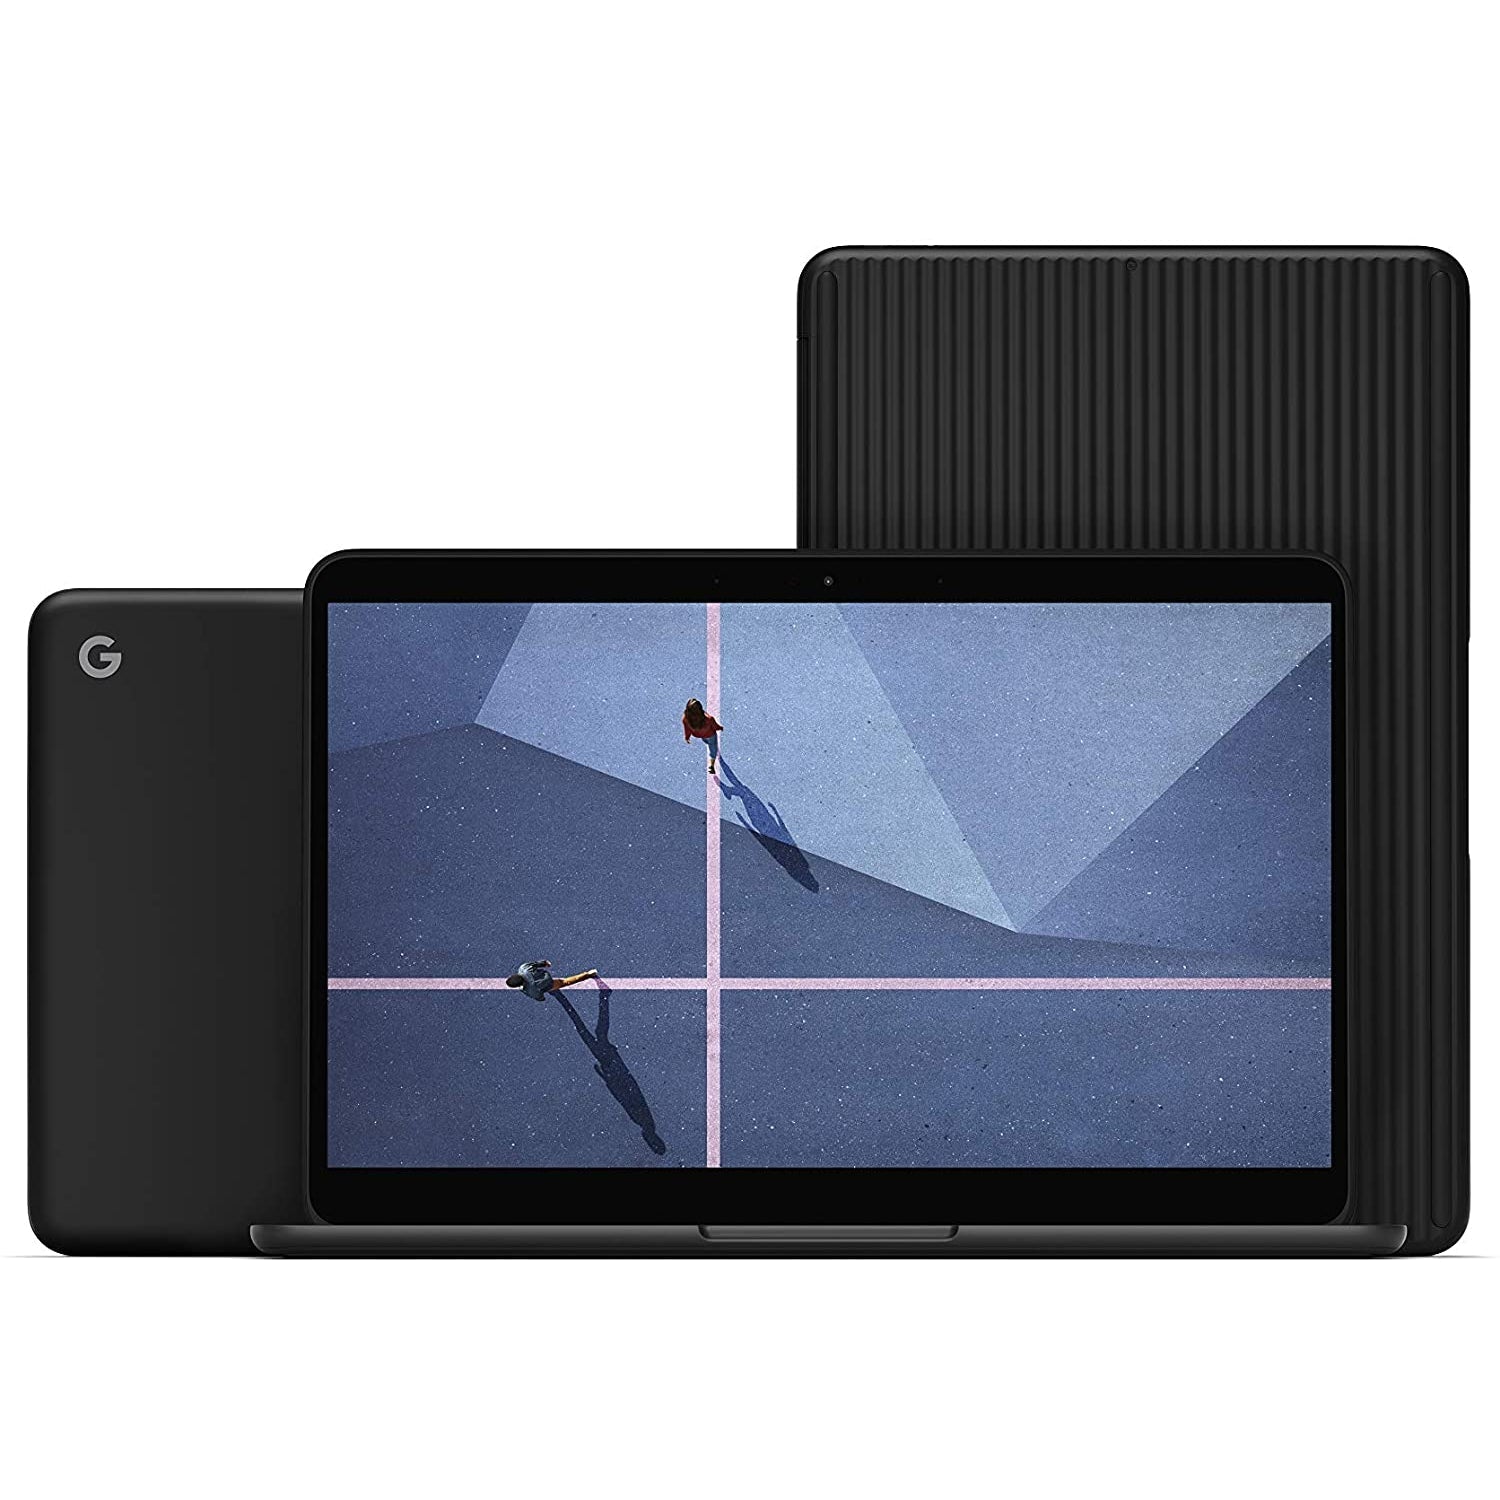 Google Pixelbook Go GA00521-UK Intel i5-8200Y 8GB 128GB 13.3" - Refurbished Good